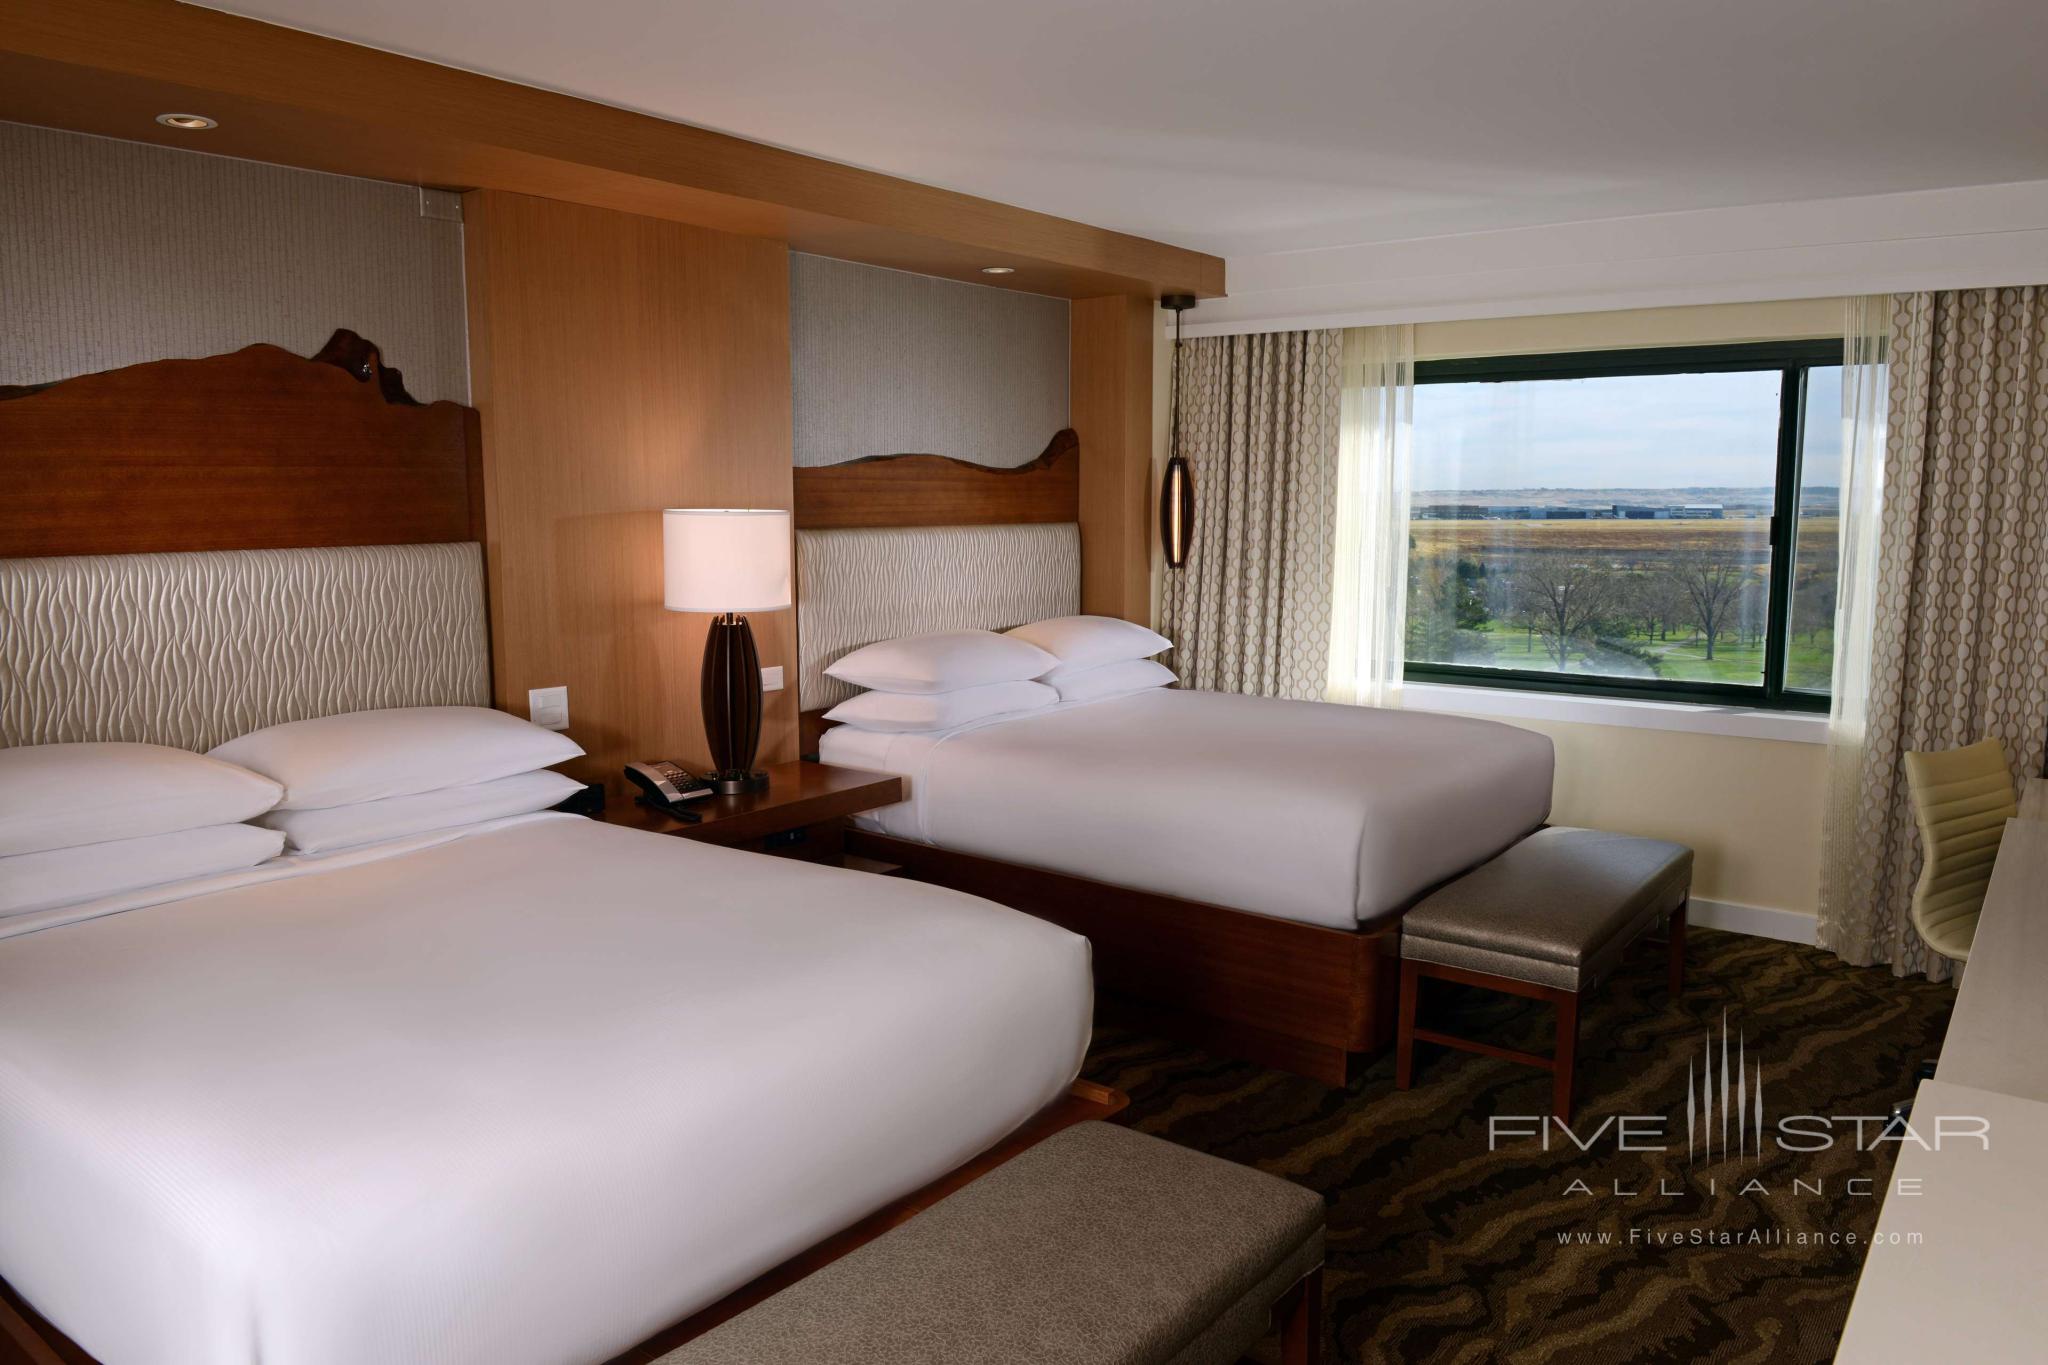 The Inverness Denver Hilton Golf and Spa Resort